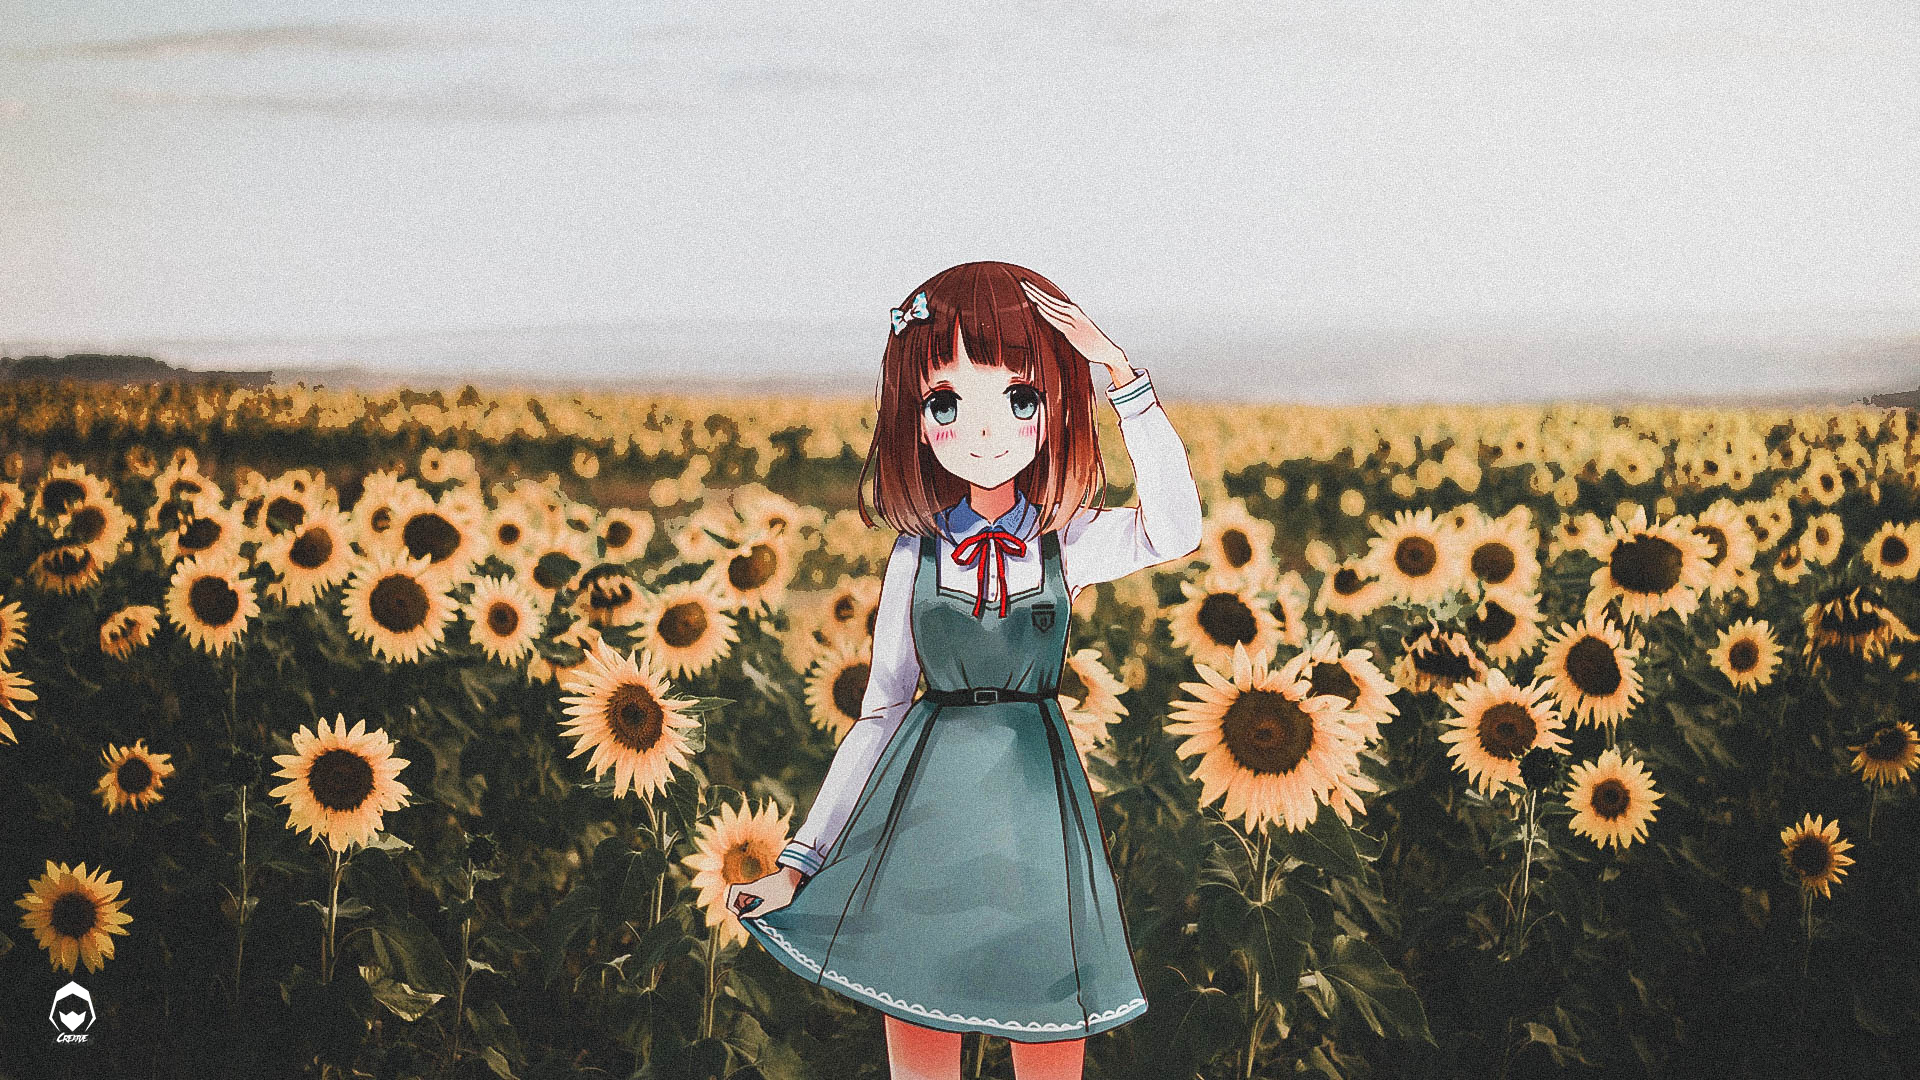 Anime 1920x1080 sunflowers anime girls anime flowers plants yellow flowers redhead dress looking at viewer field